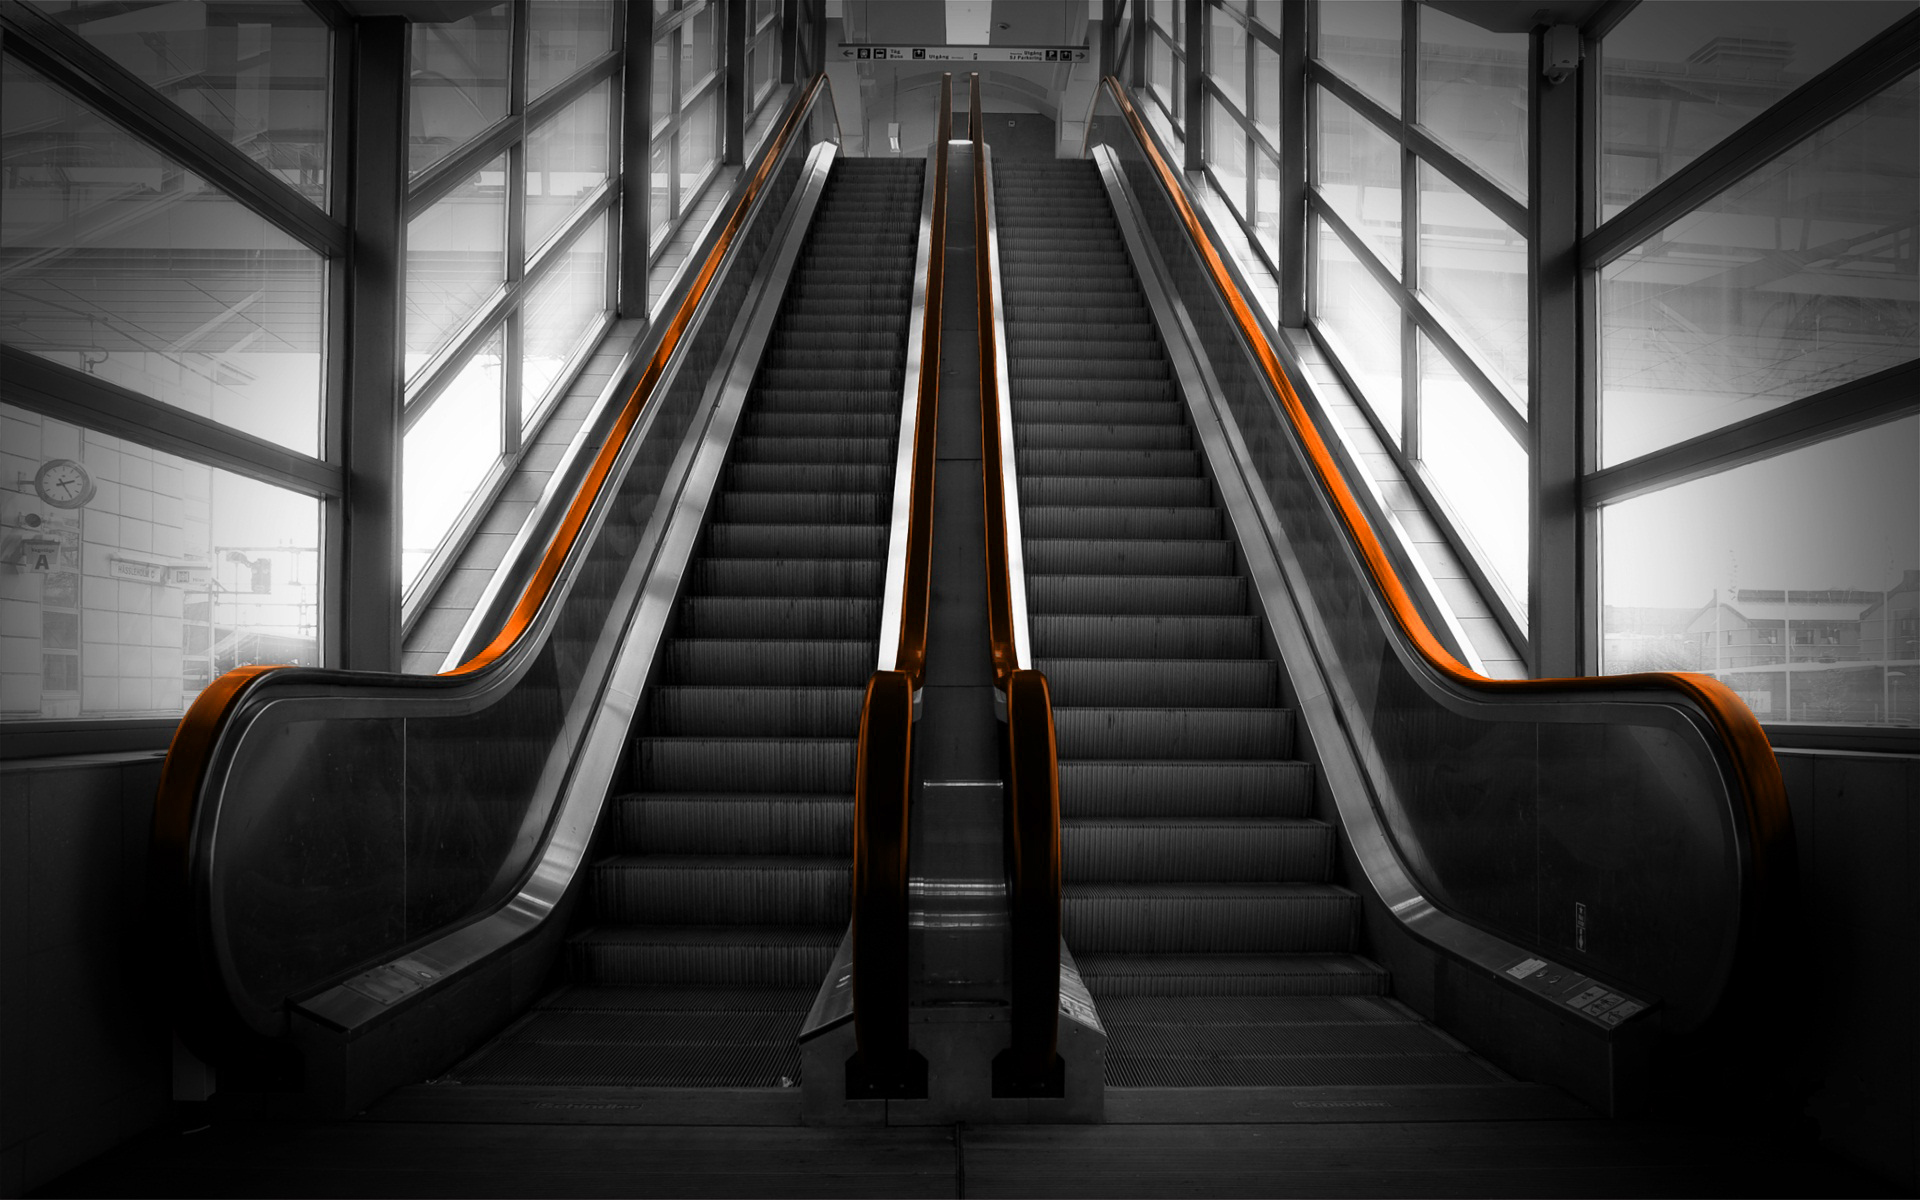 architecture, escalators - desktop wallpaper